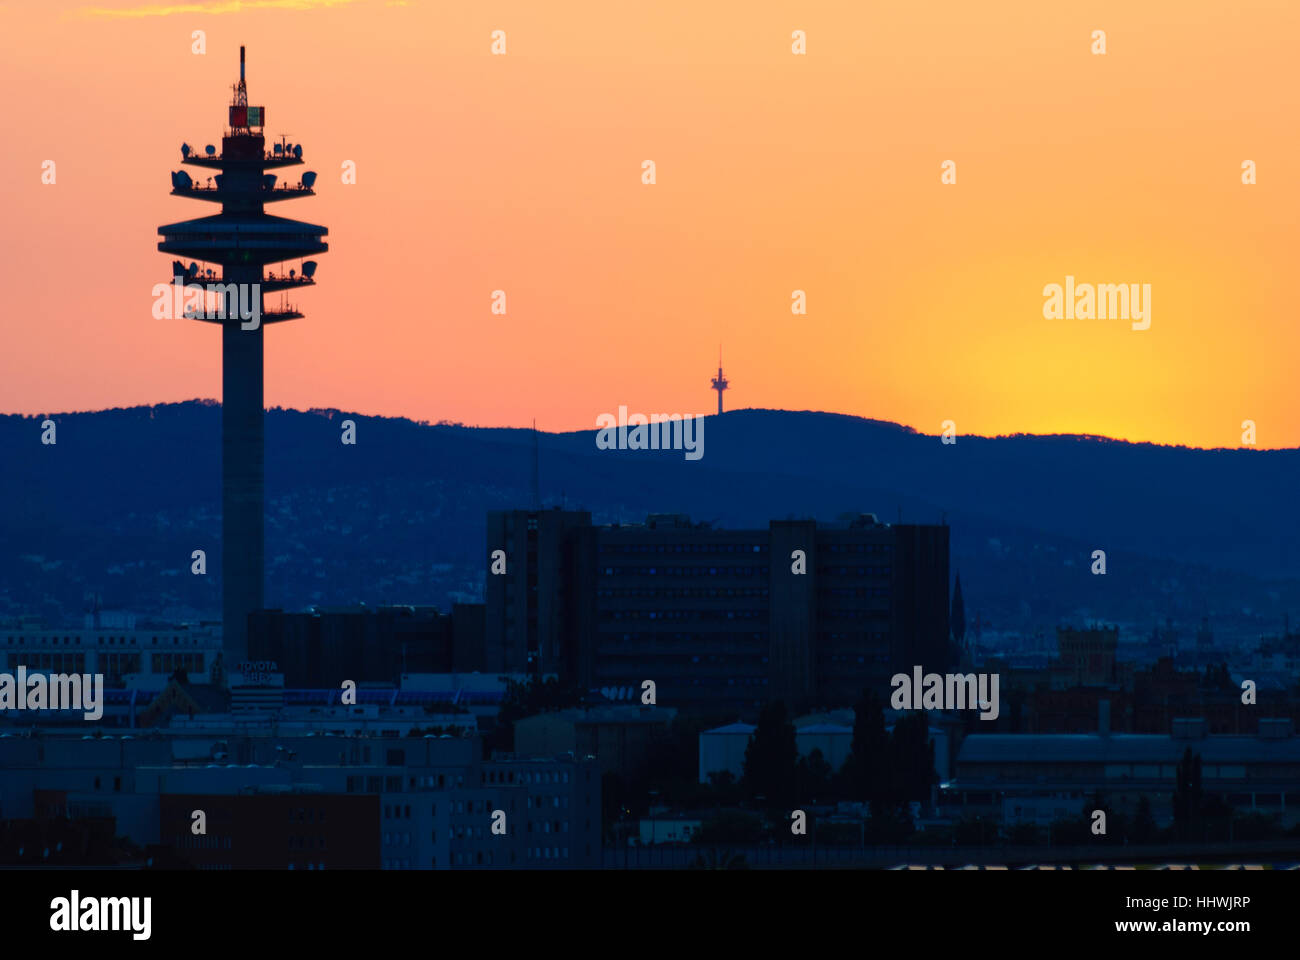 Wien, Vienna: torri di telecomunicazione di Telekom Austria in arsenale e sulla montagna di Exel (destra) 00., Wien, Austria Foto Stock